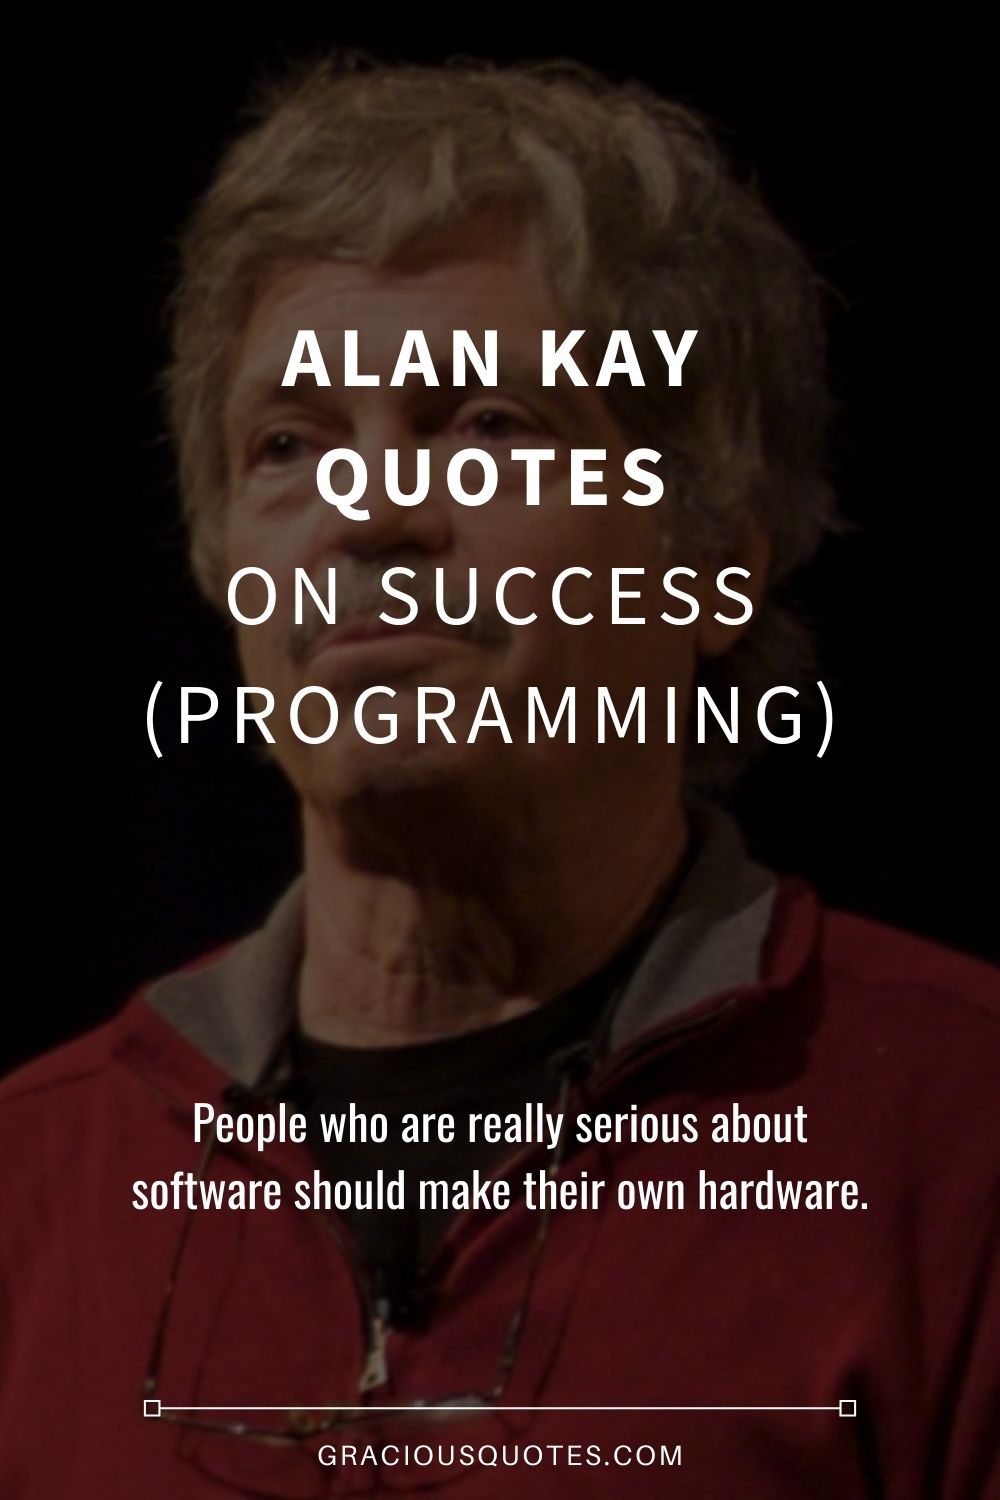 Alan Kay Quotes on Success (PROGRAMMING) - Gracious Quotes